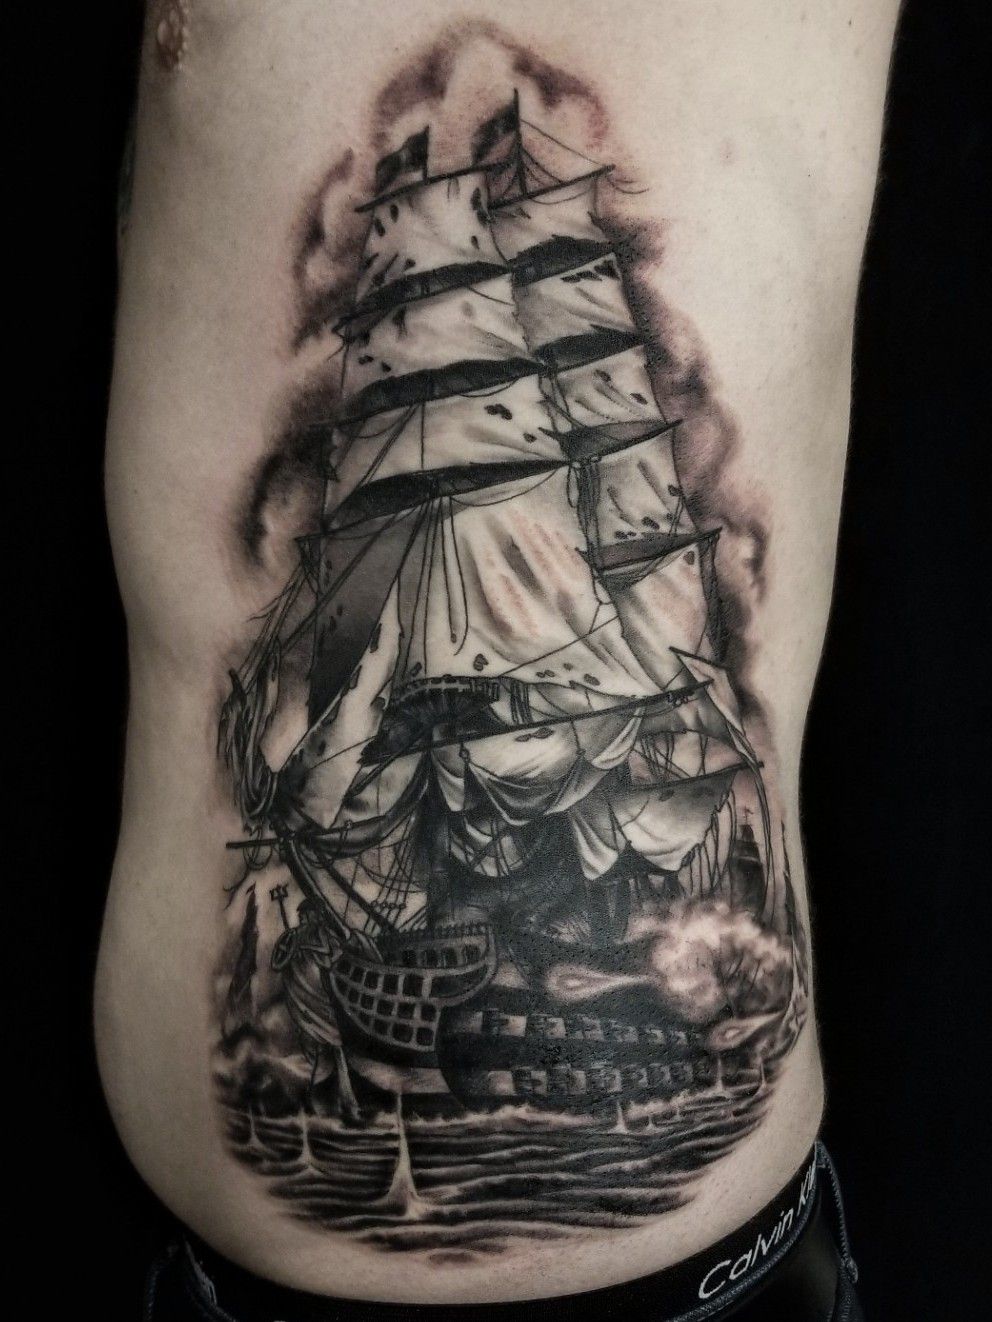 Carrie DF on Twitter Finally got another AFI tattoo Black Sails   httpstcox0CgKsdRDA  Twitter